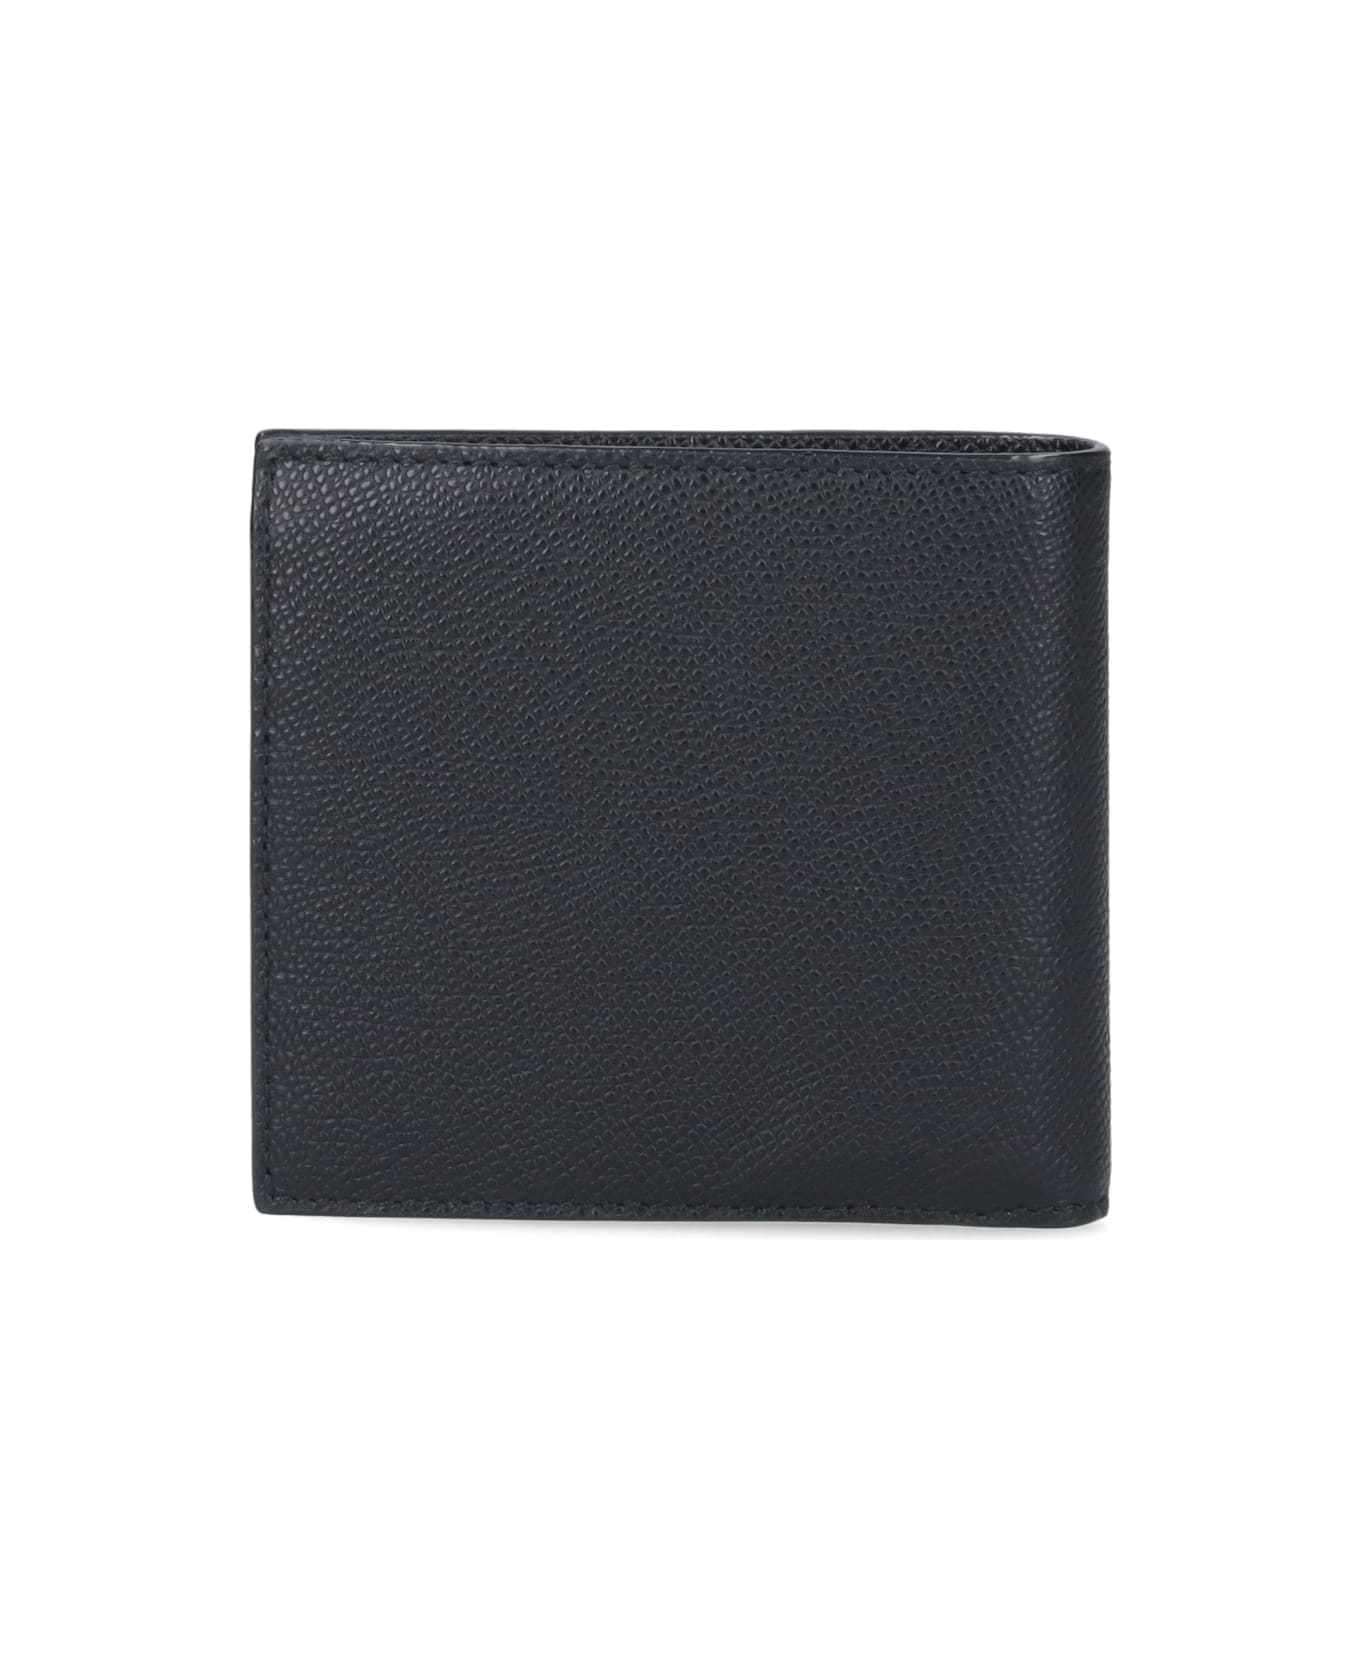 Bally Logo Wallet - Black   財布